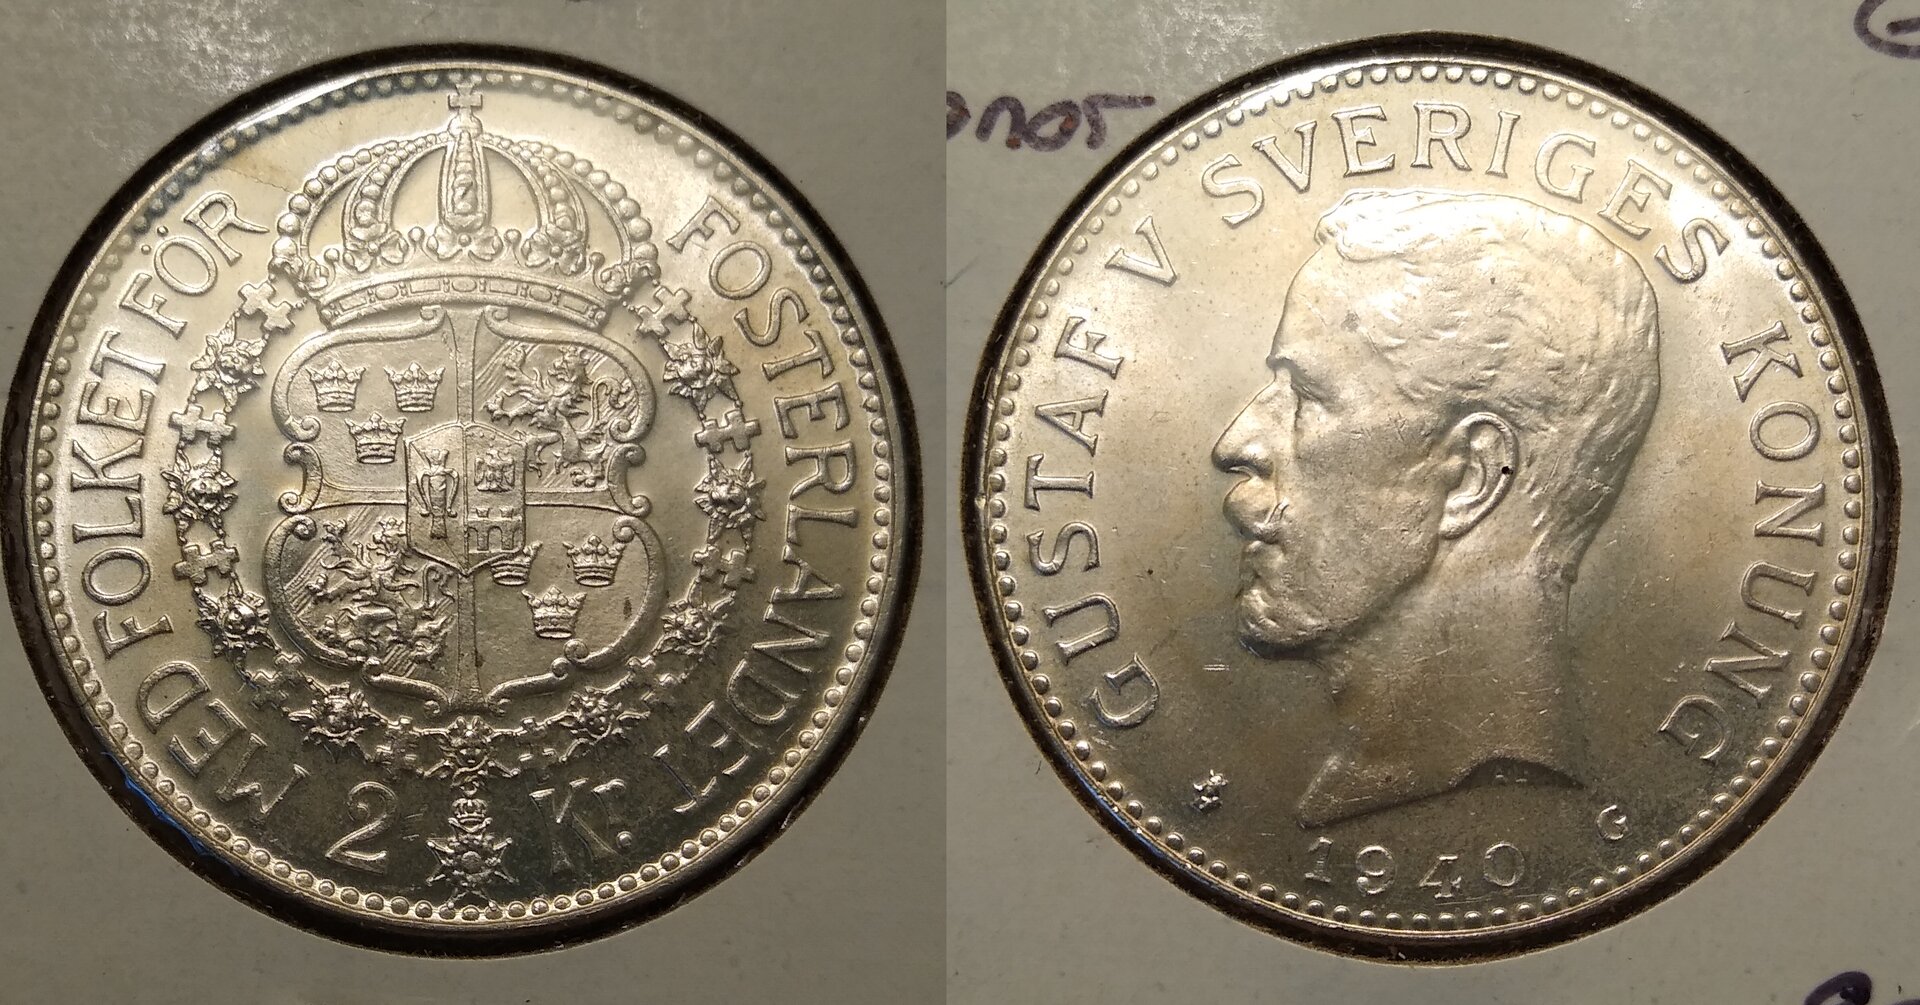 1940 sweden 2 kronor.jpg